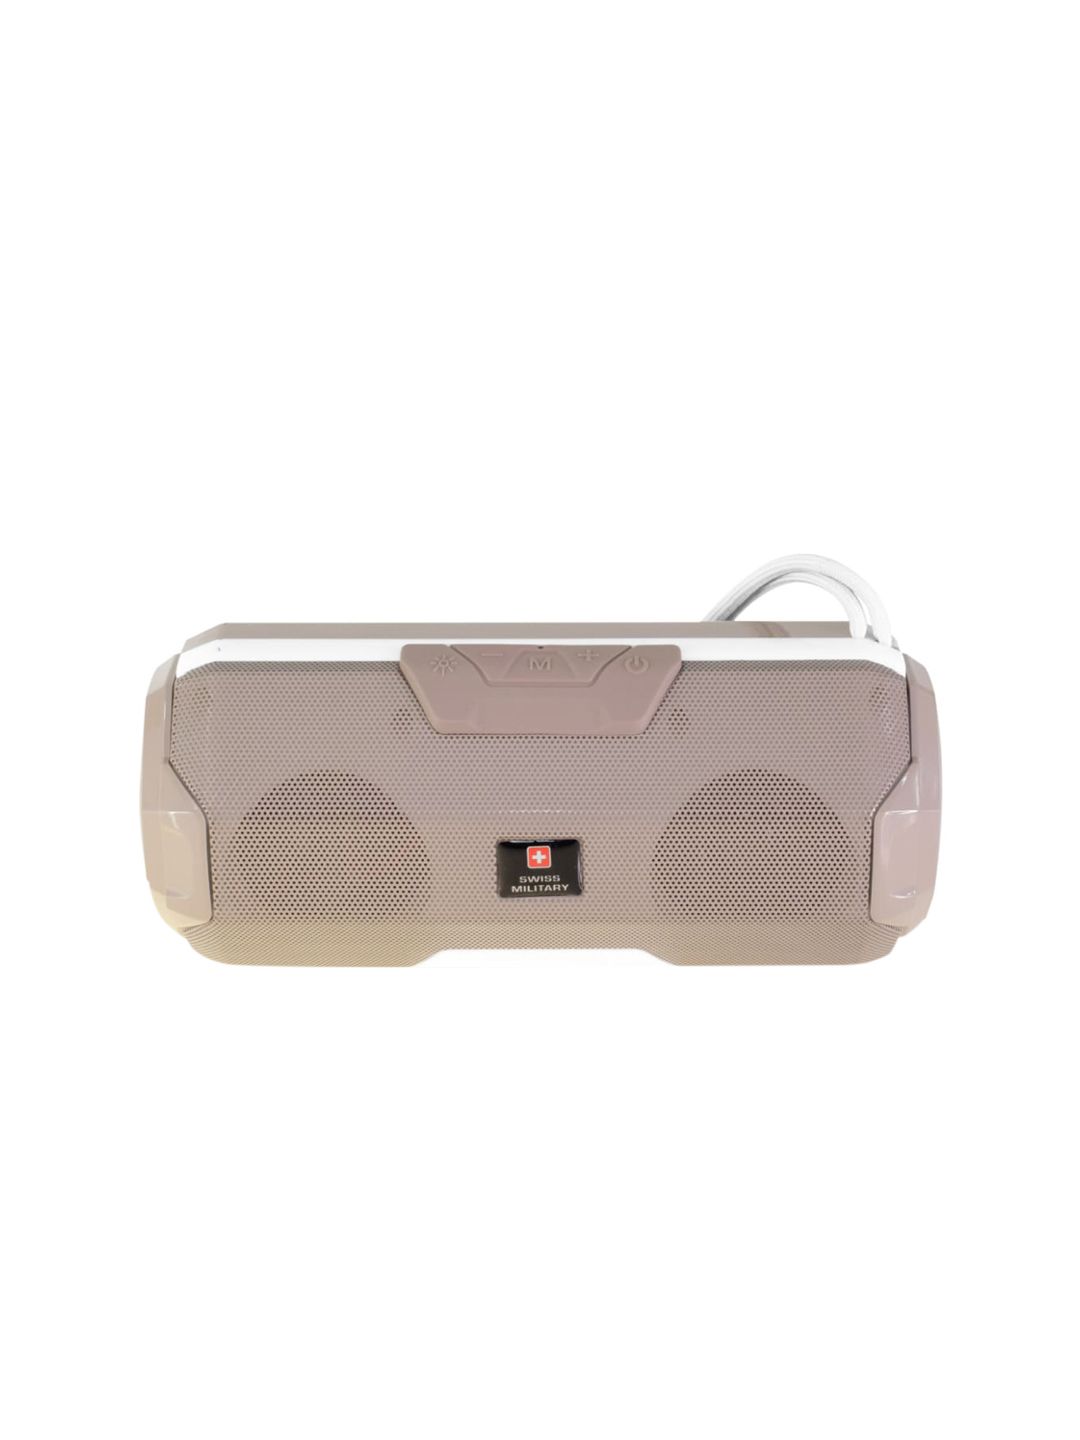 SWISS MILITARY Beige Bluetooth Speaker - The Edge Series (bl25) Price in India